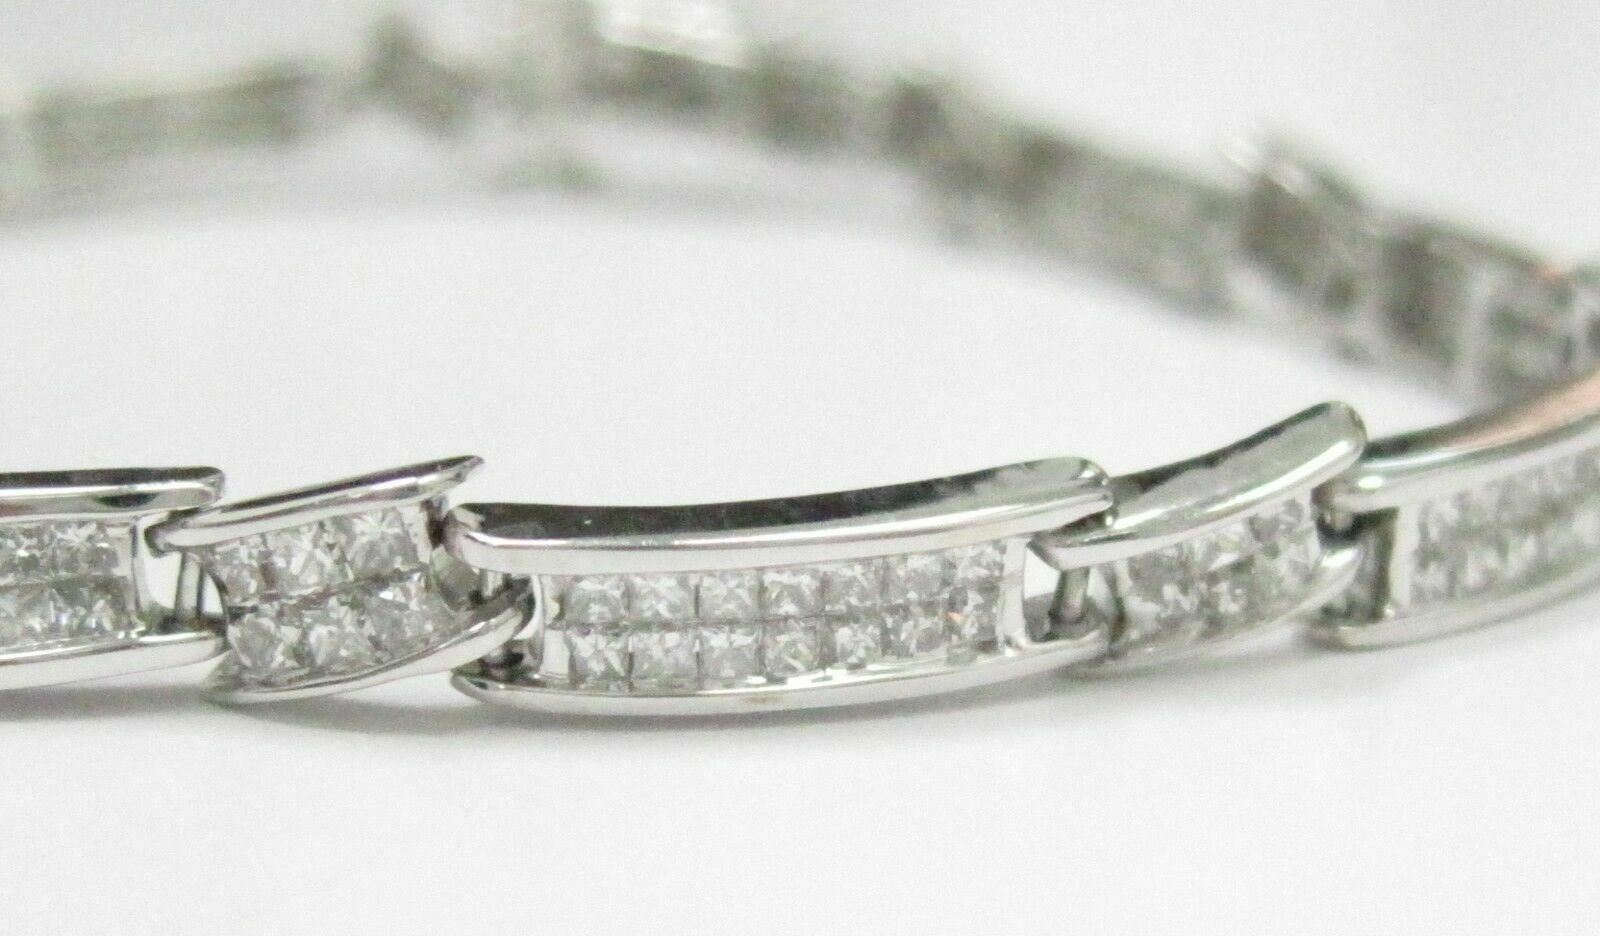 2.00 TCW 2 Row Princess Cut Diamond Bracelet H-I SI1 7 Inches 14k White Gold